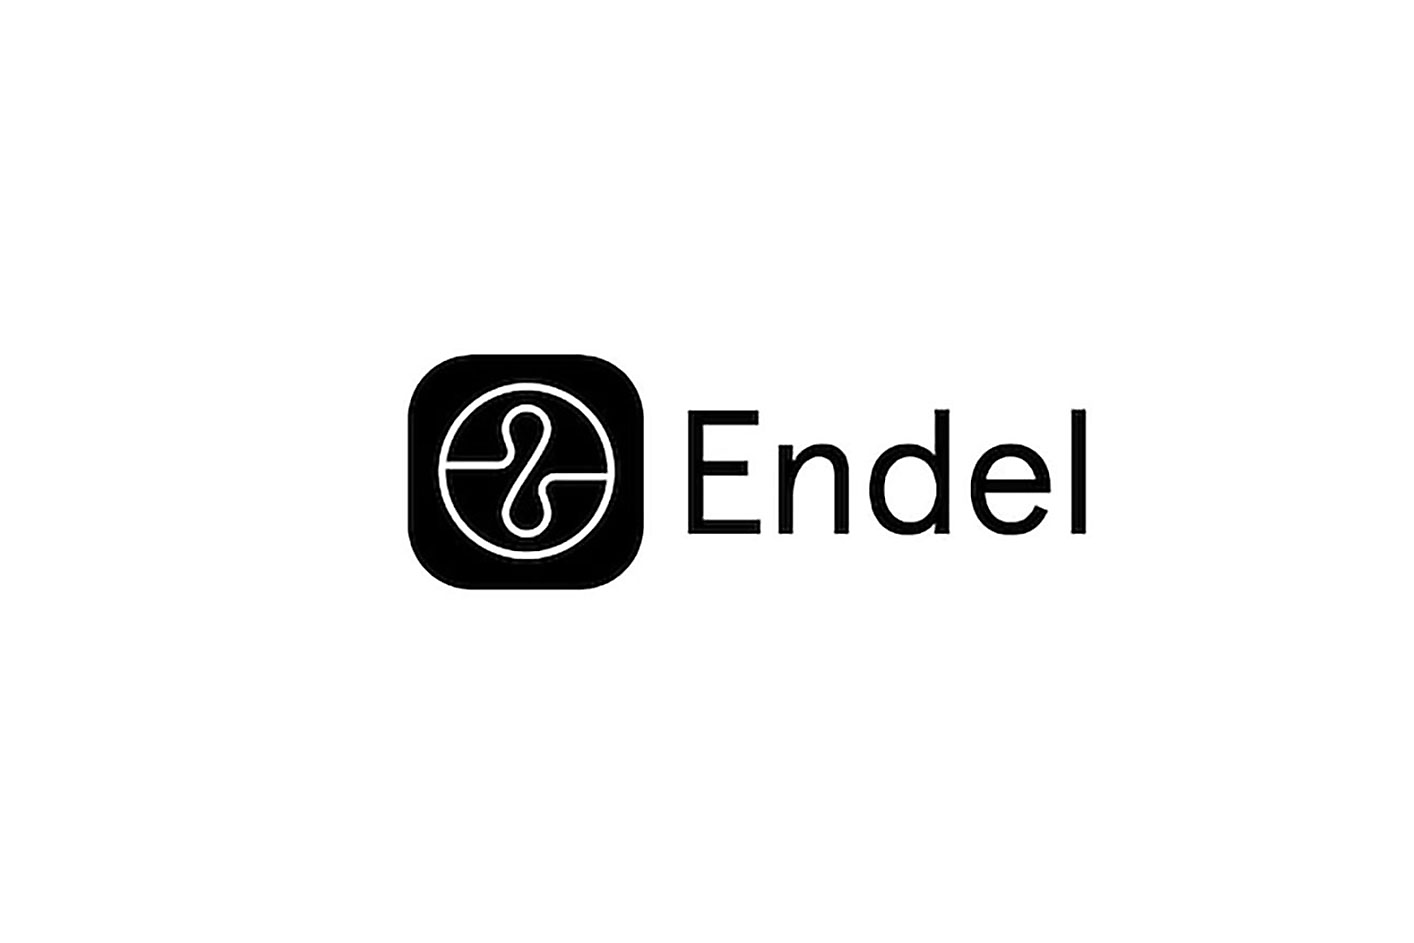 Endel 標誌圖